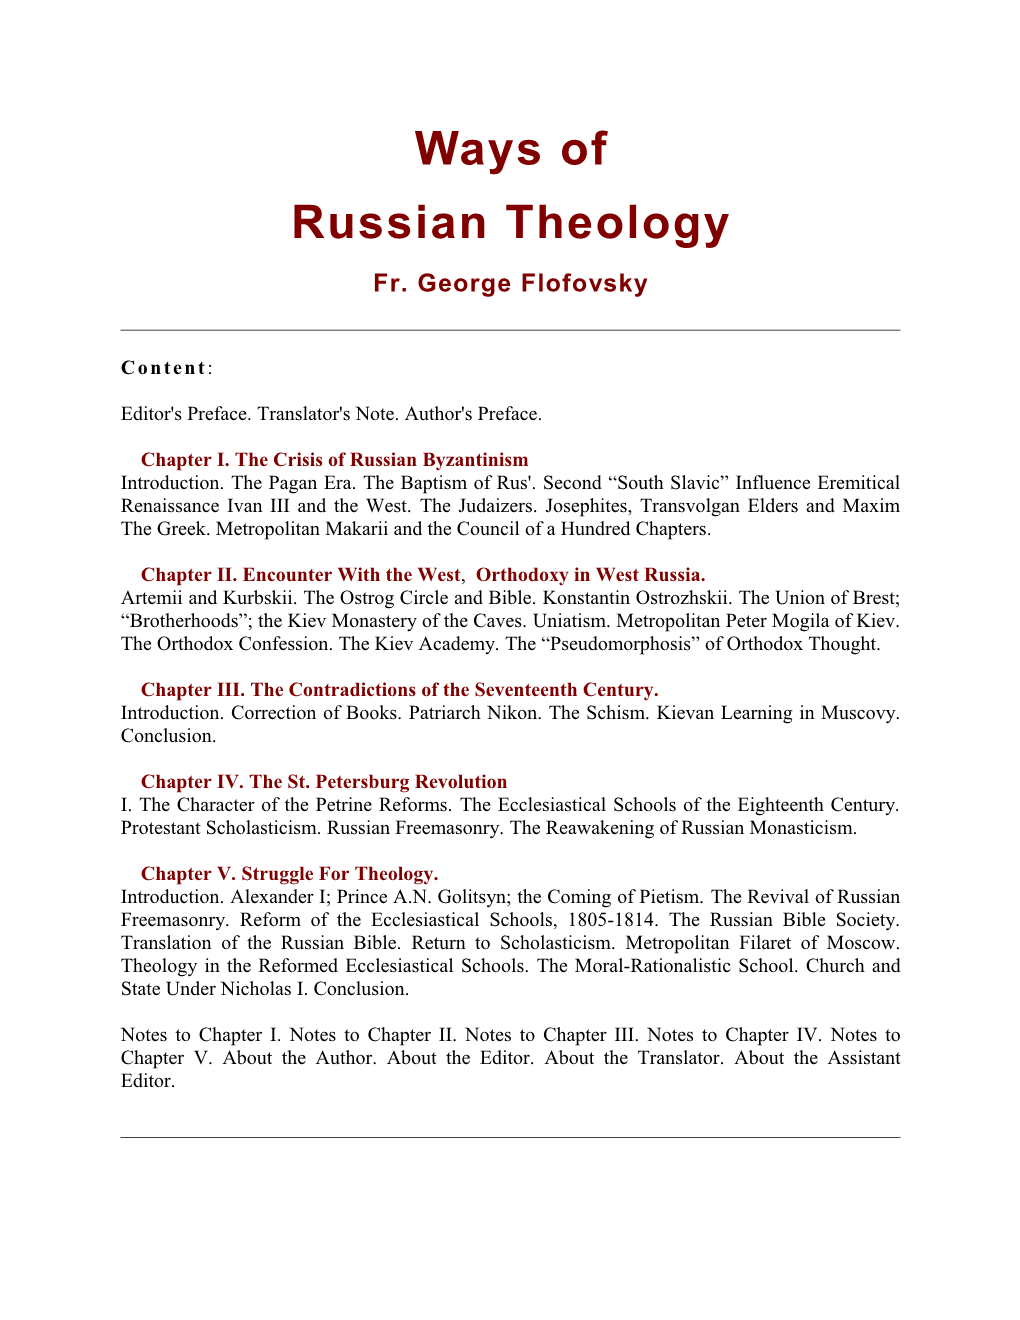 Russian Theology